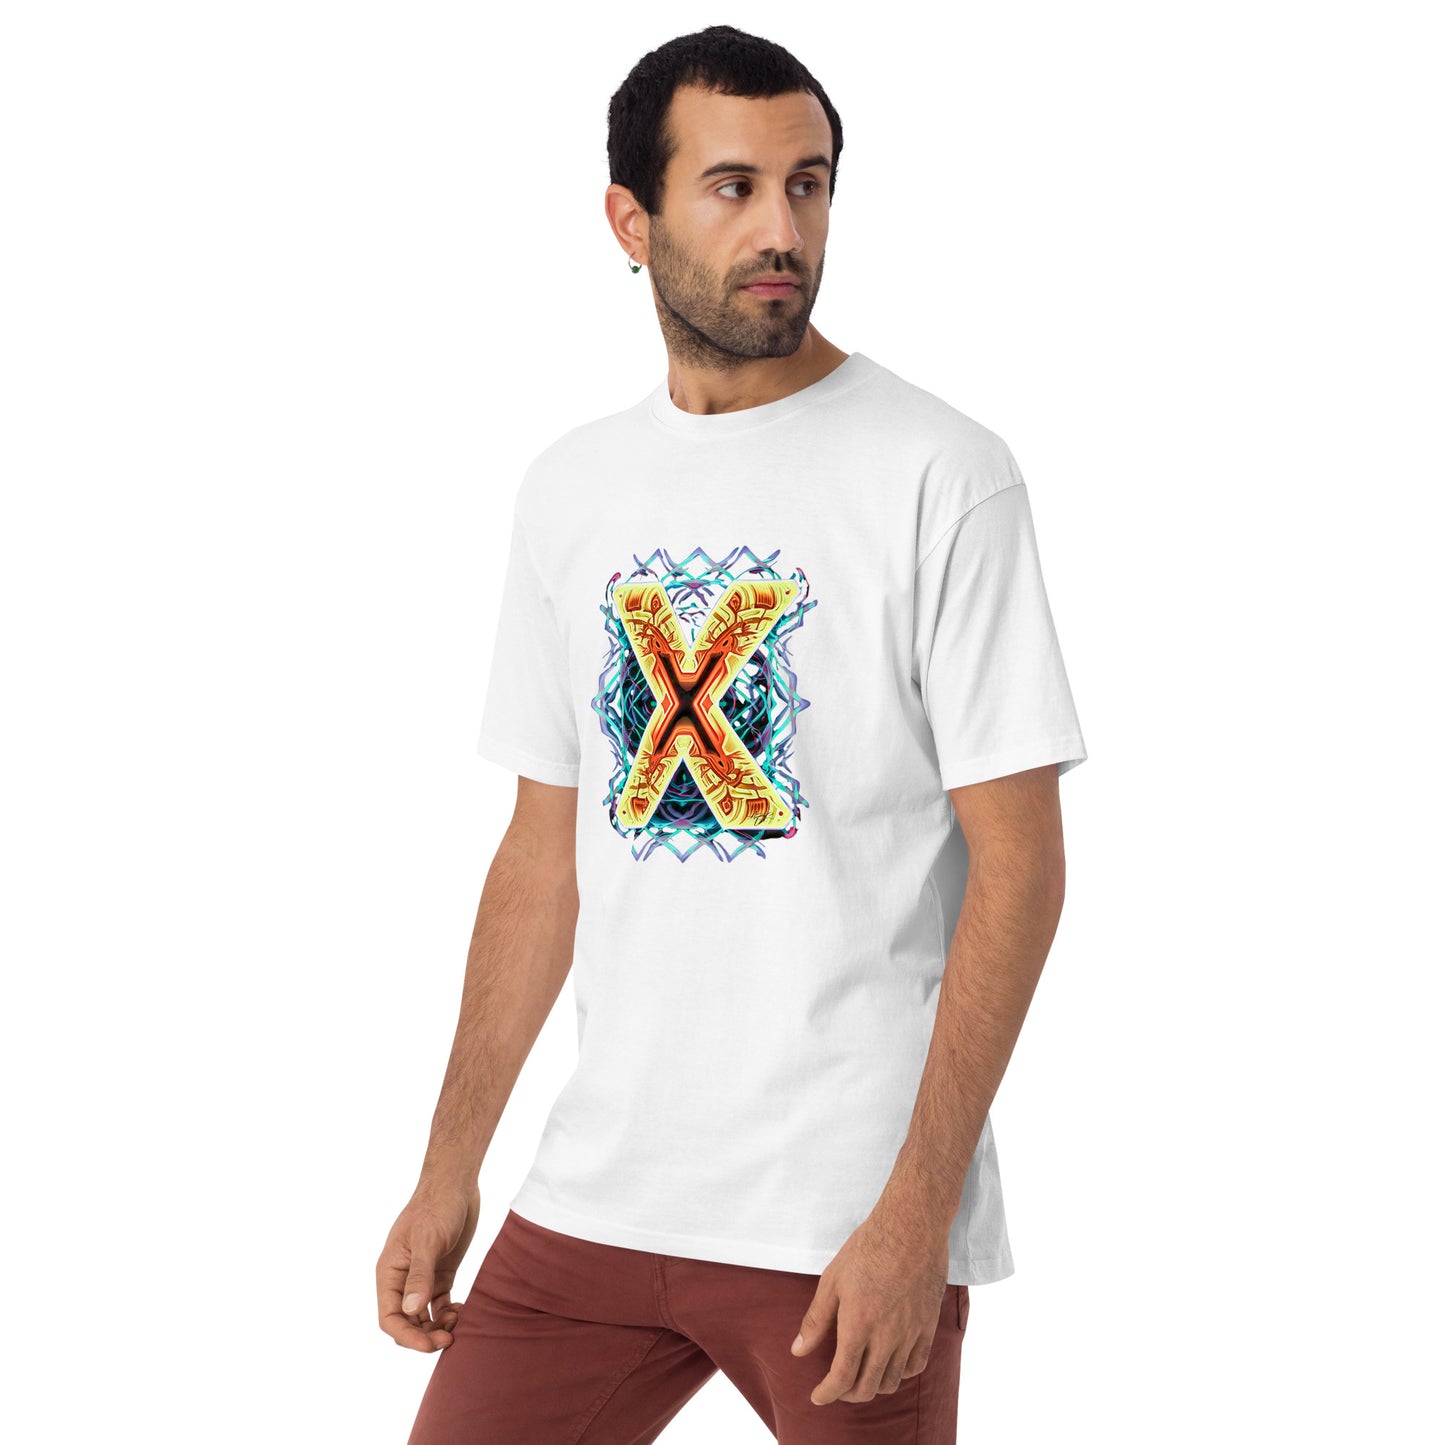 T-shirt poids lourd haut de gamme Hallucinogen-X